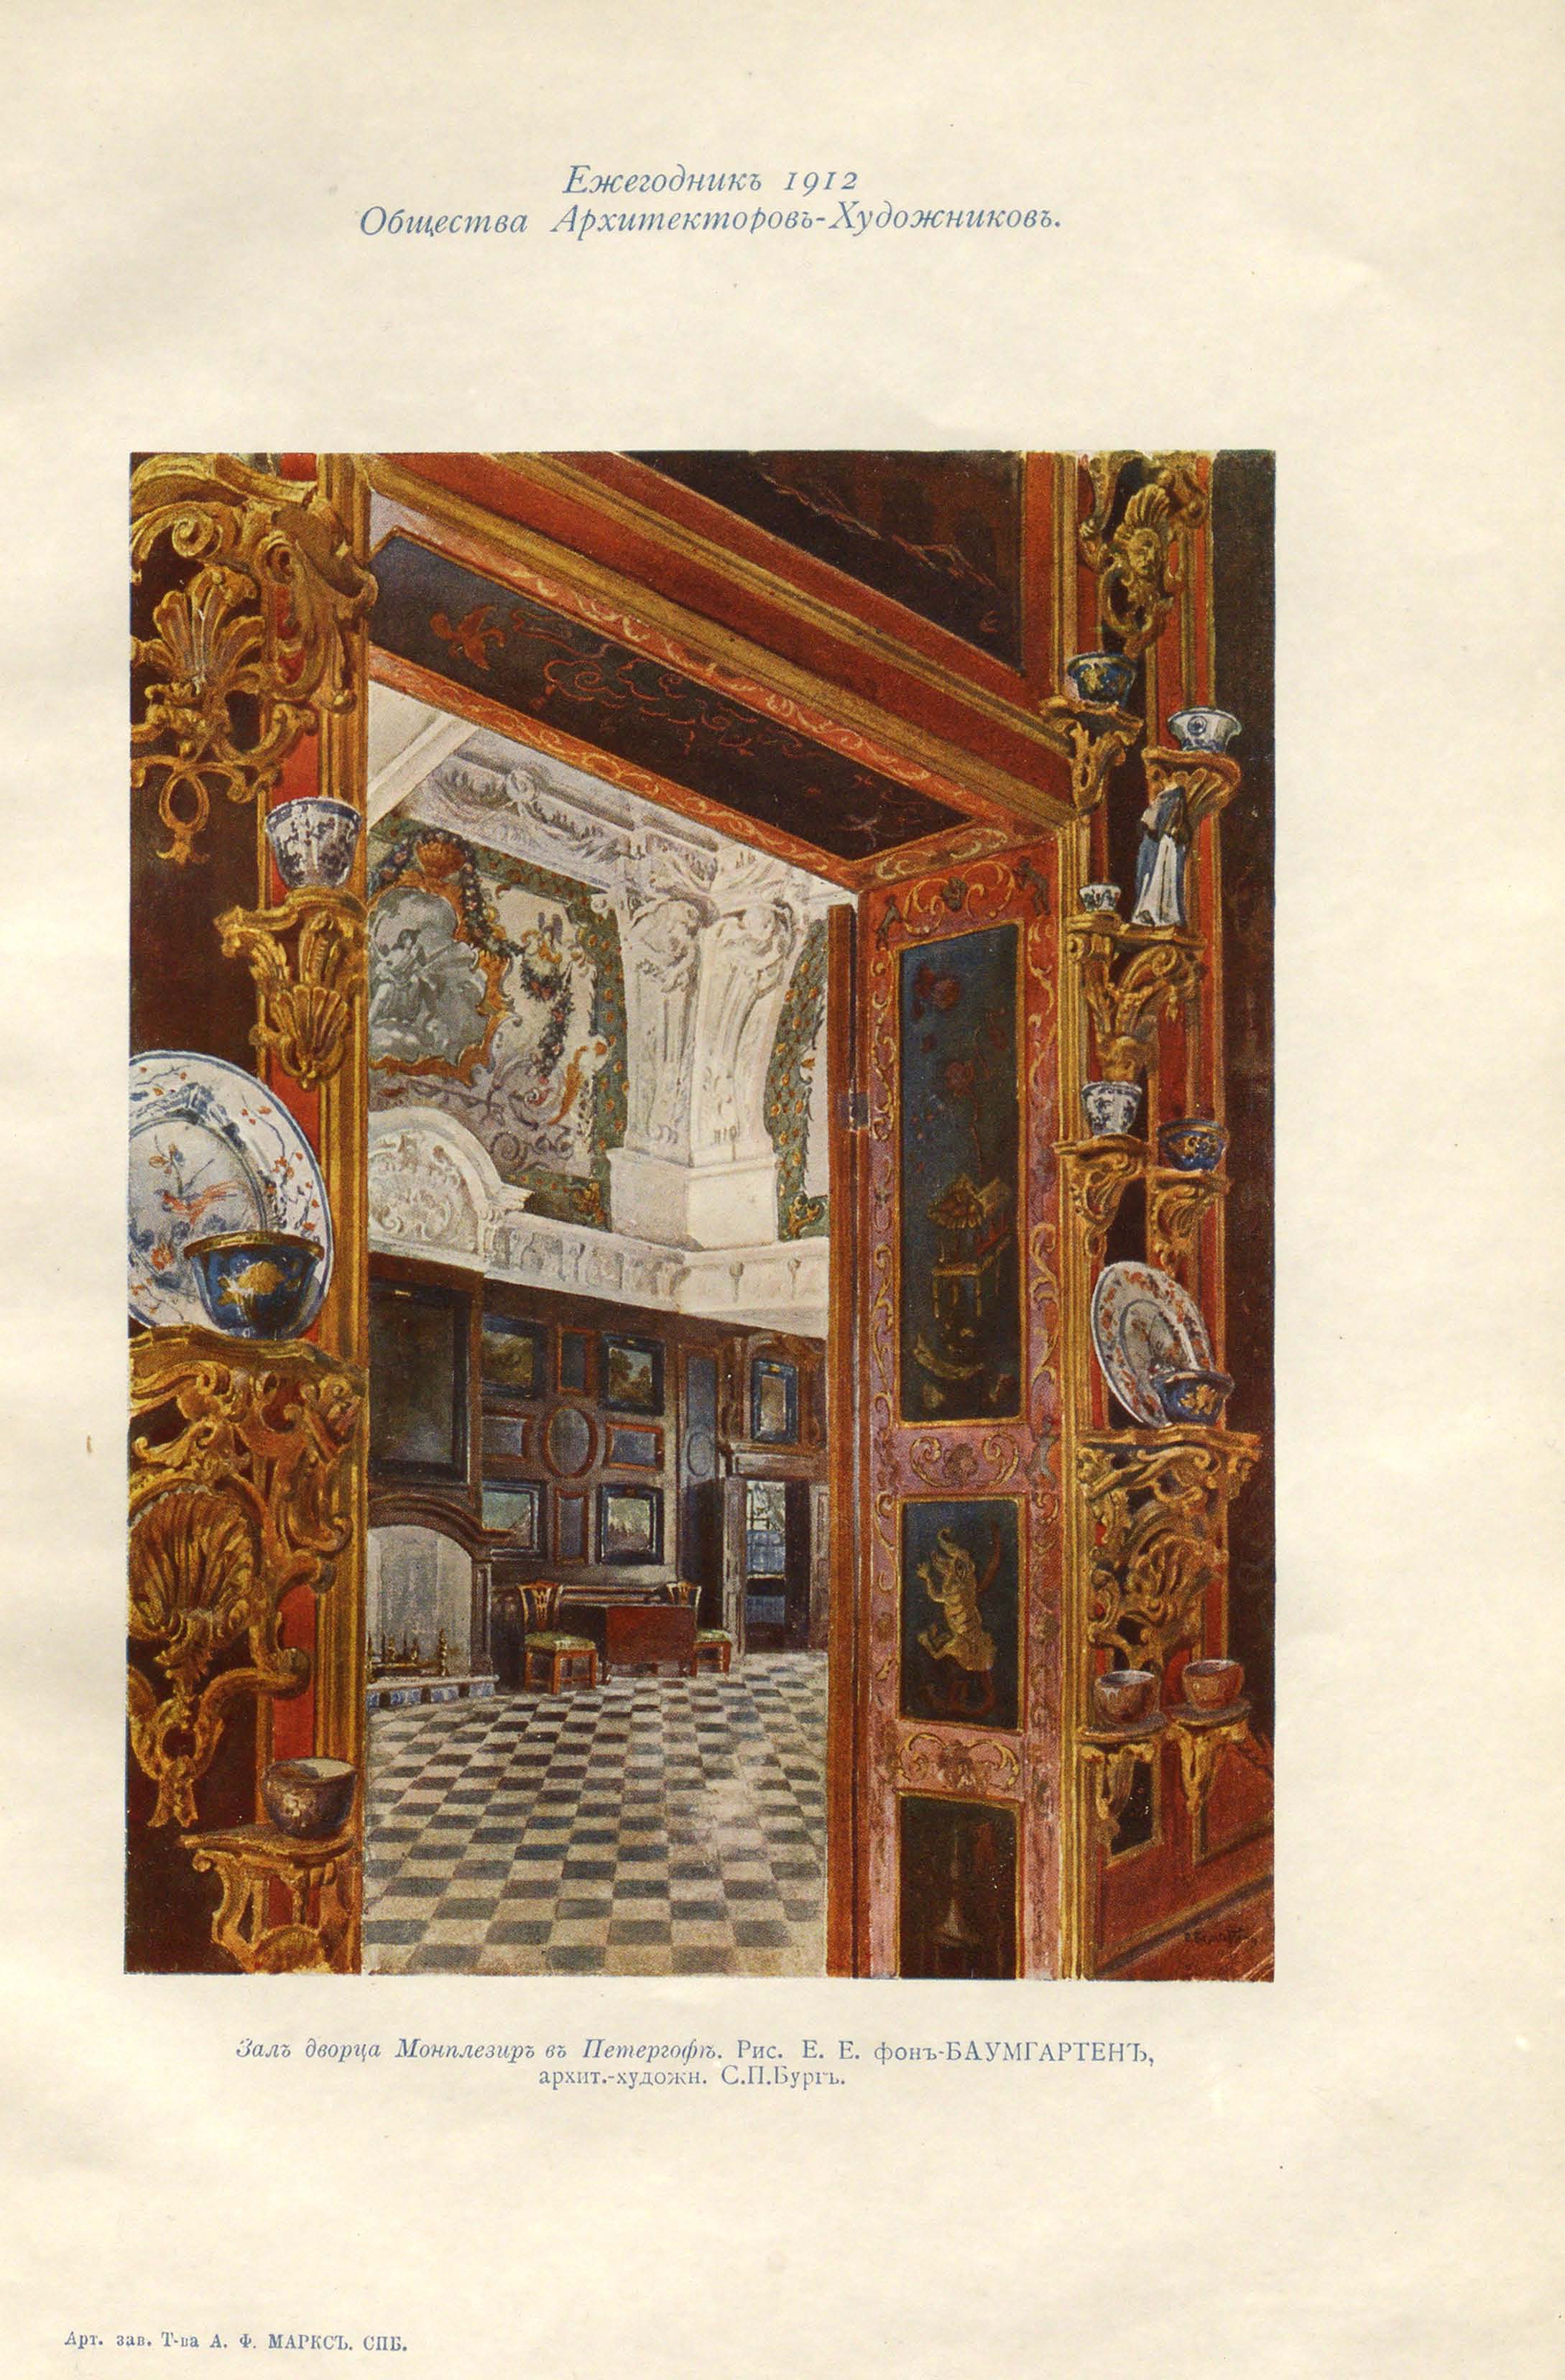 Е. Е. фон-Баумгартен. Рисунок зала дворца Монплезир в Петергофе